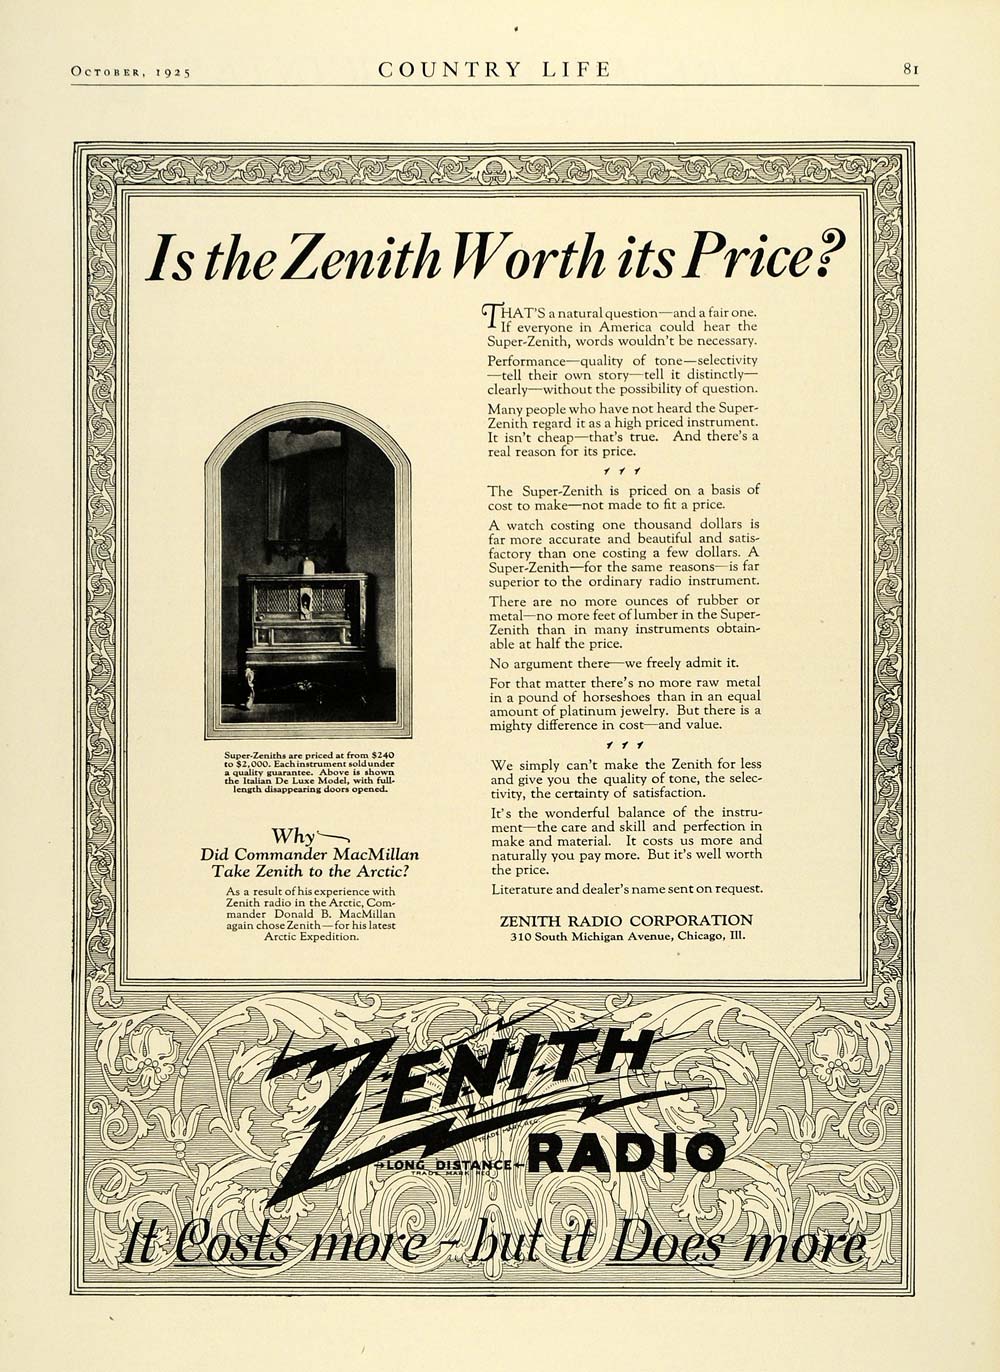 1925 Ad Zenith Radio Italian De Luxe Model Music Player Antique Chicago COL2